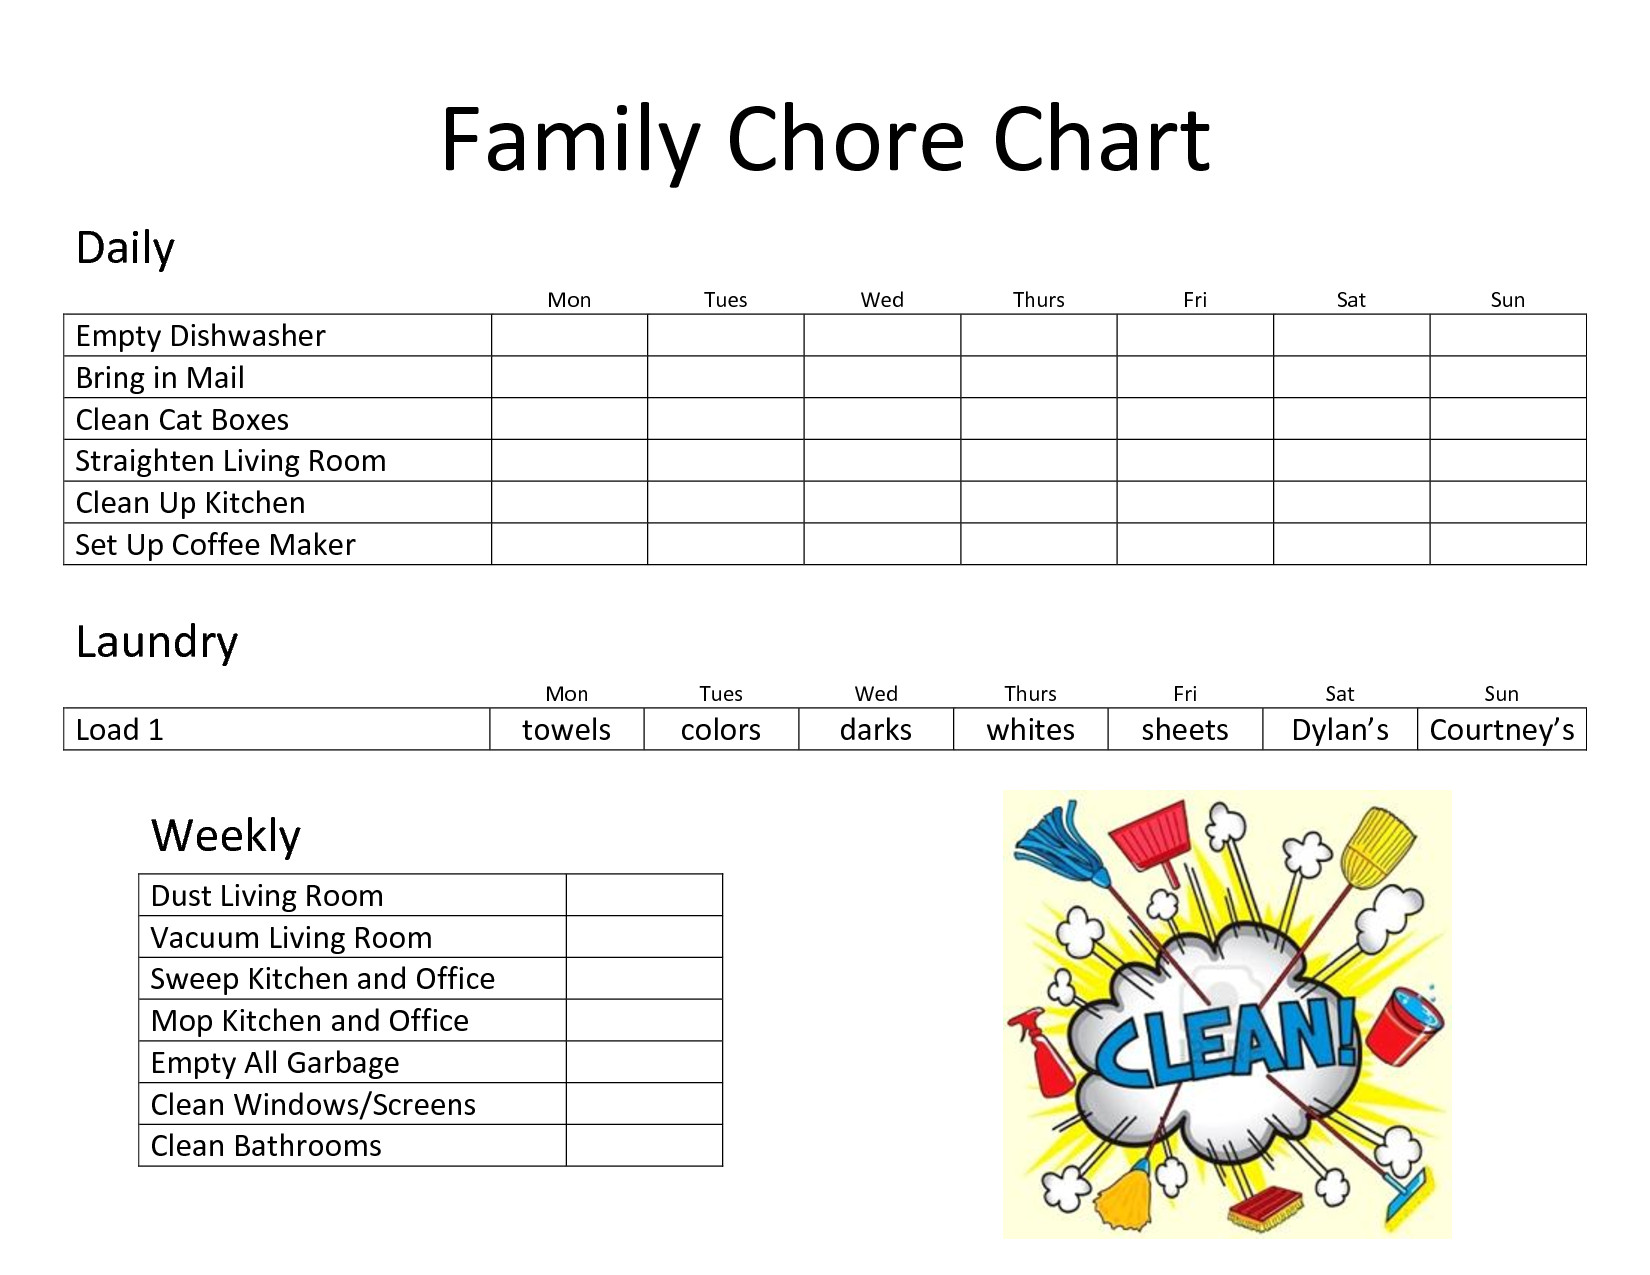 Daily Family Chore Chart Template Chore charts